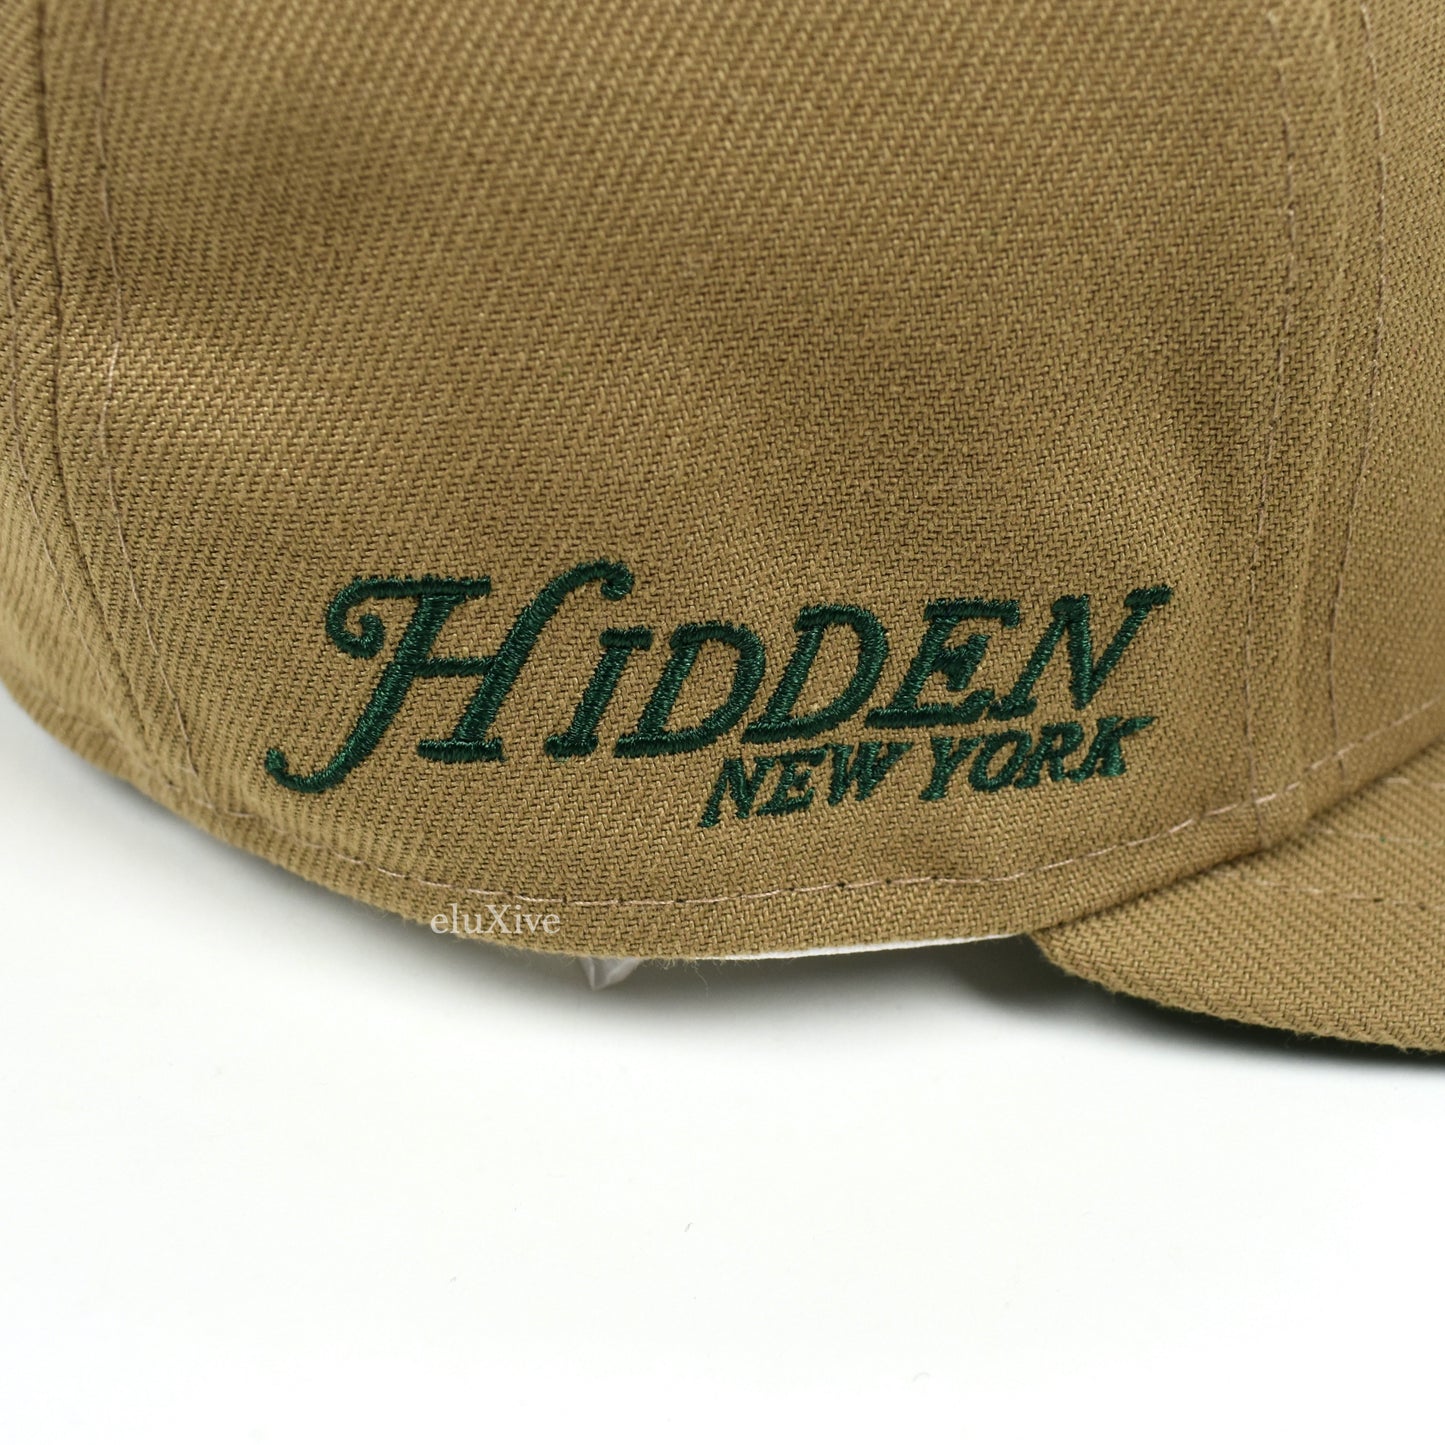 Hidden NY x New Era - Tan H Logo Fitted Hat